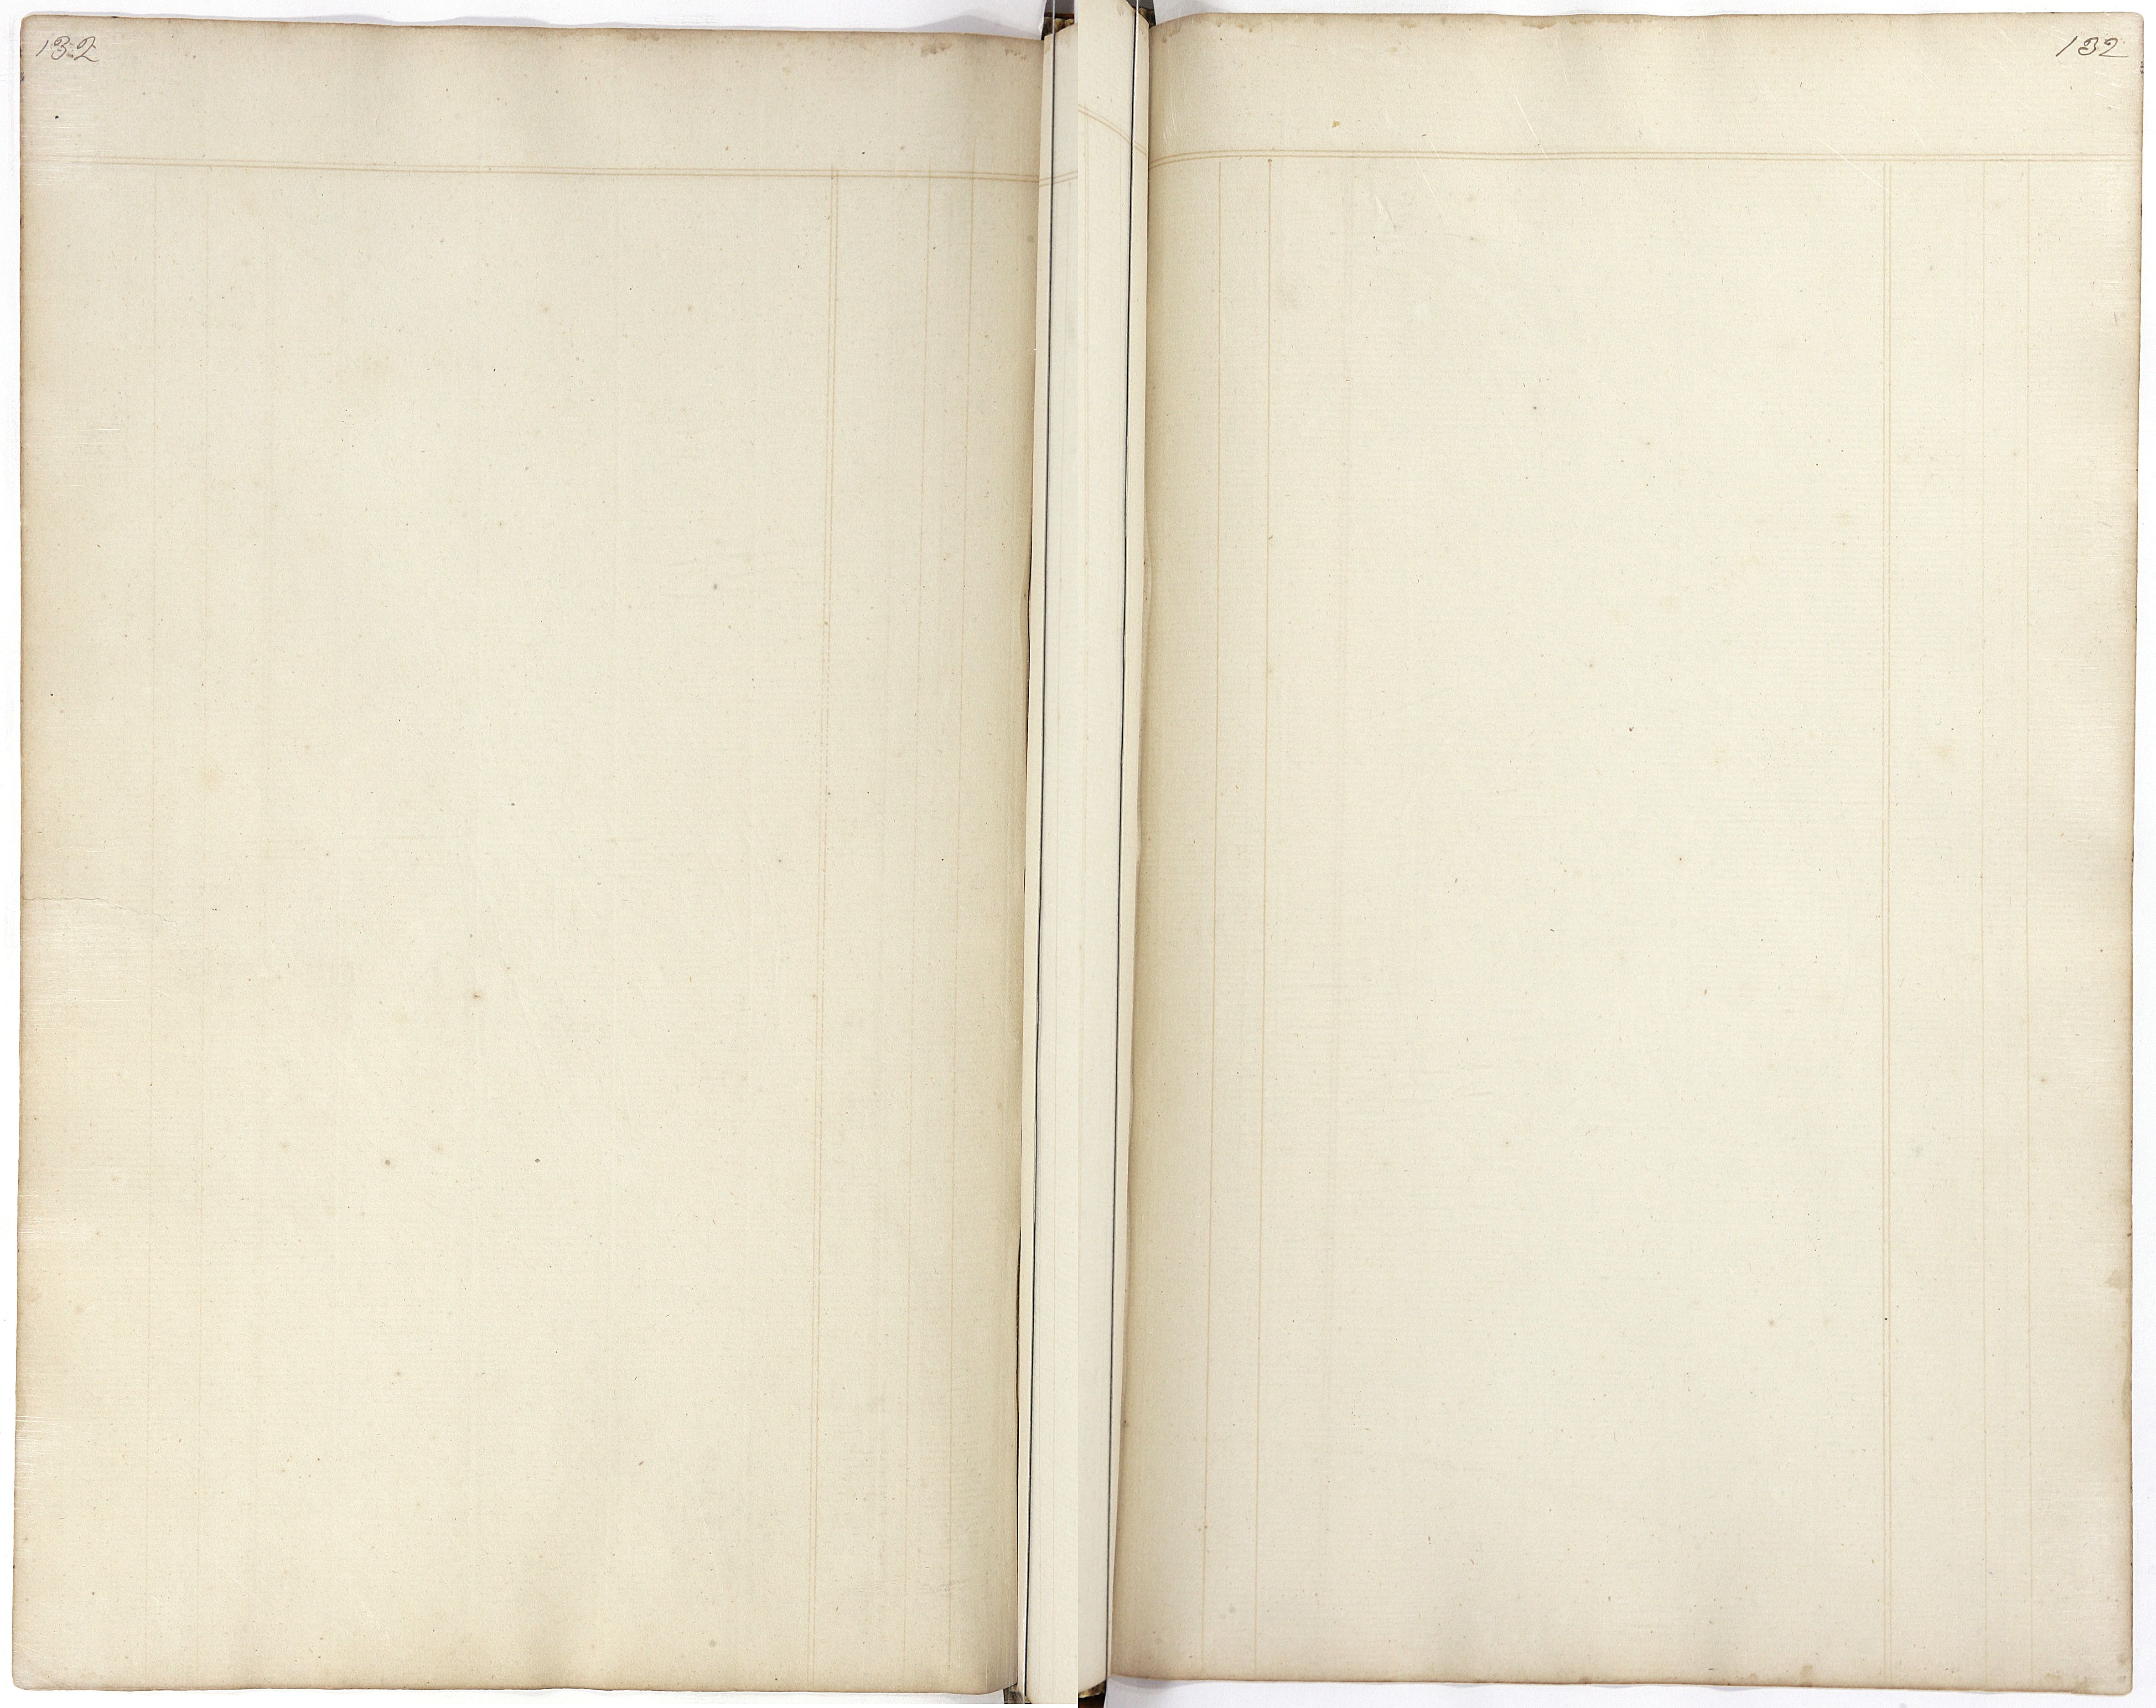 Image of Folio 132 (transcription below)